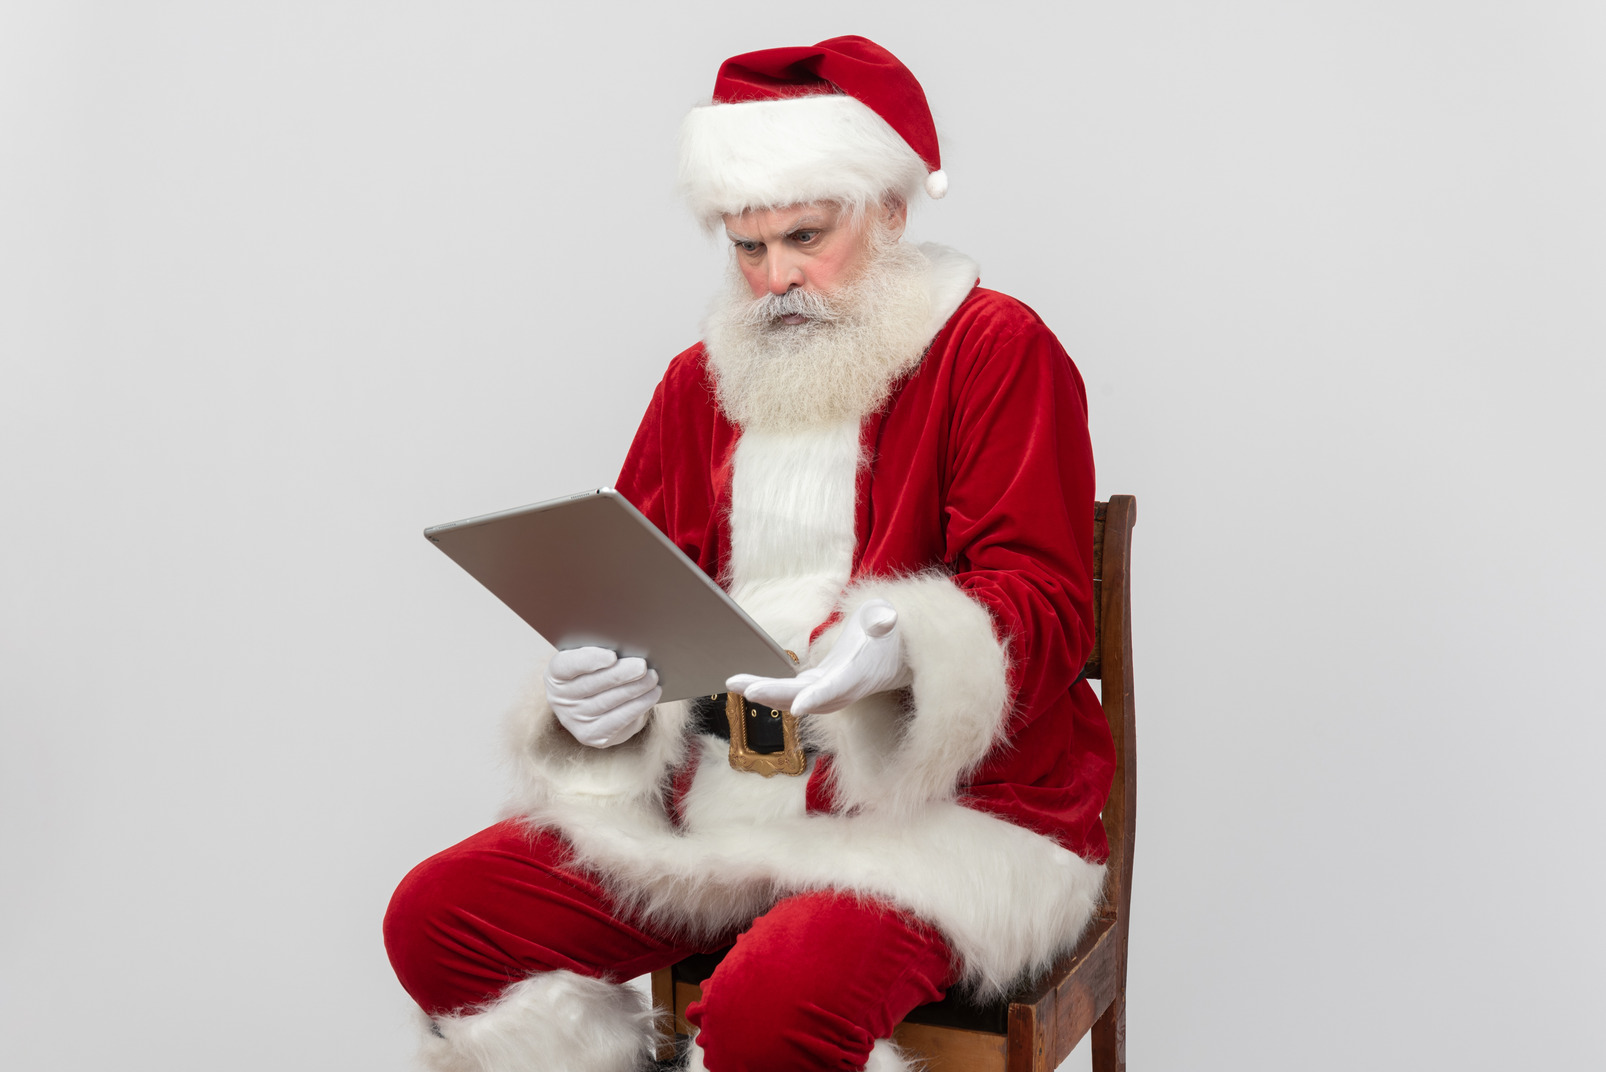 Santa claus reading folder and seems like not understanding something